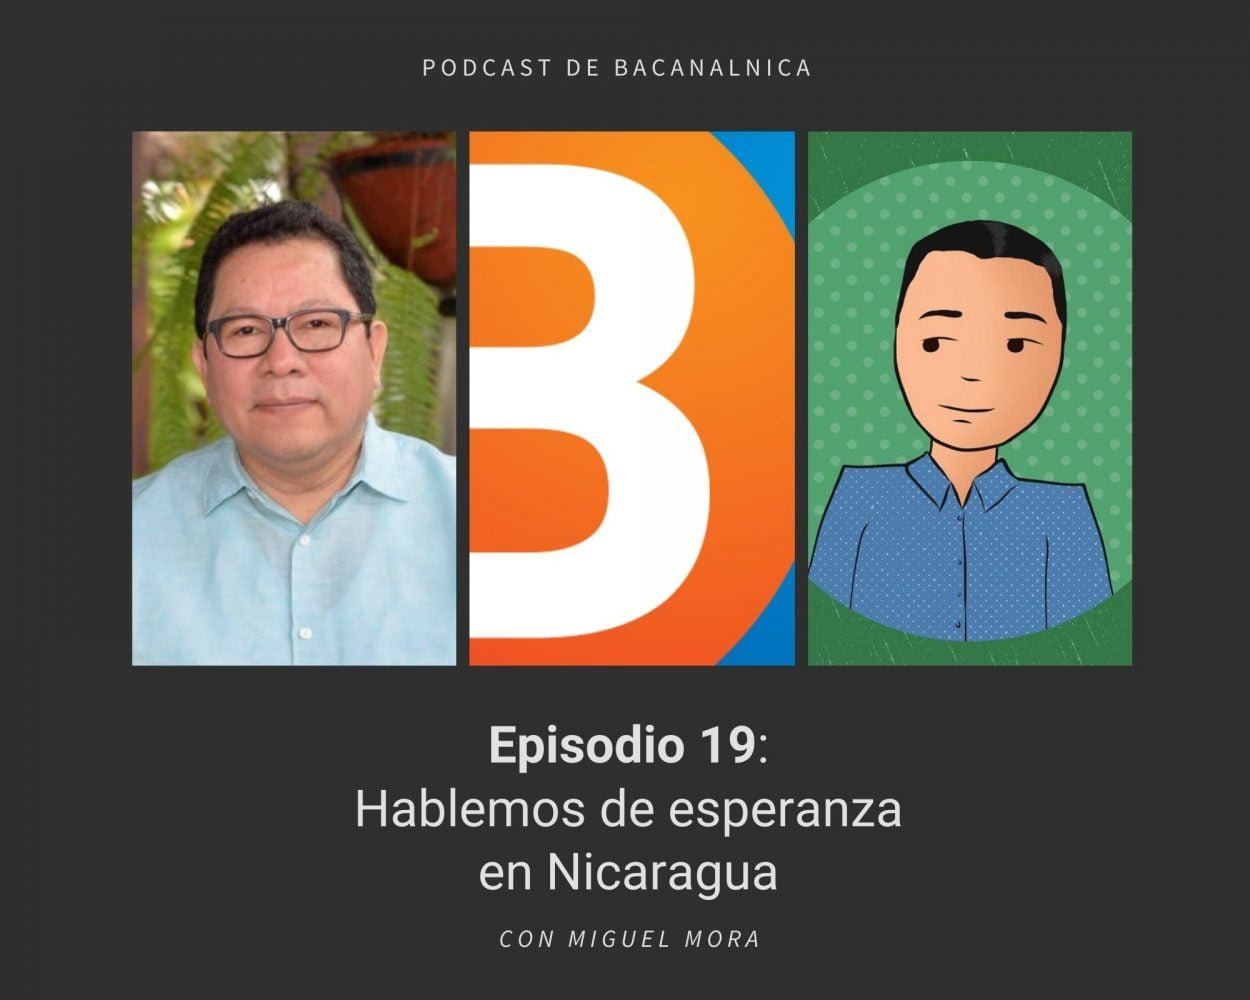 Episodio 19 del podcast de Bacanalnica con Miguel Mora